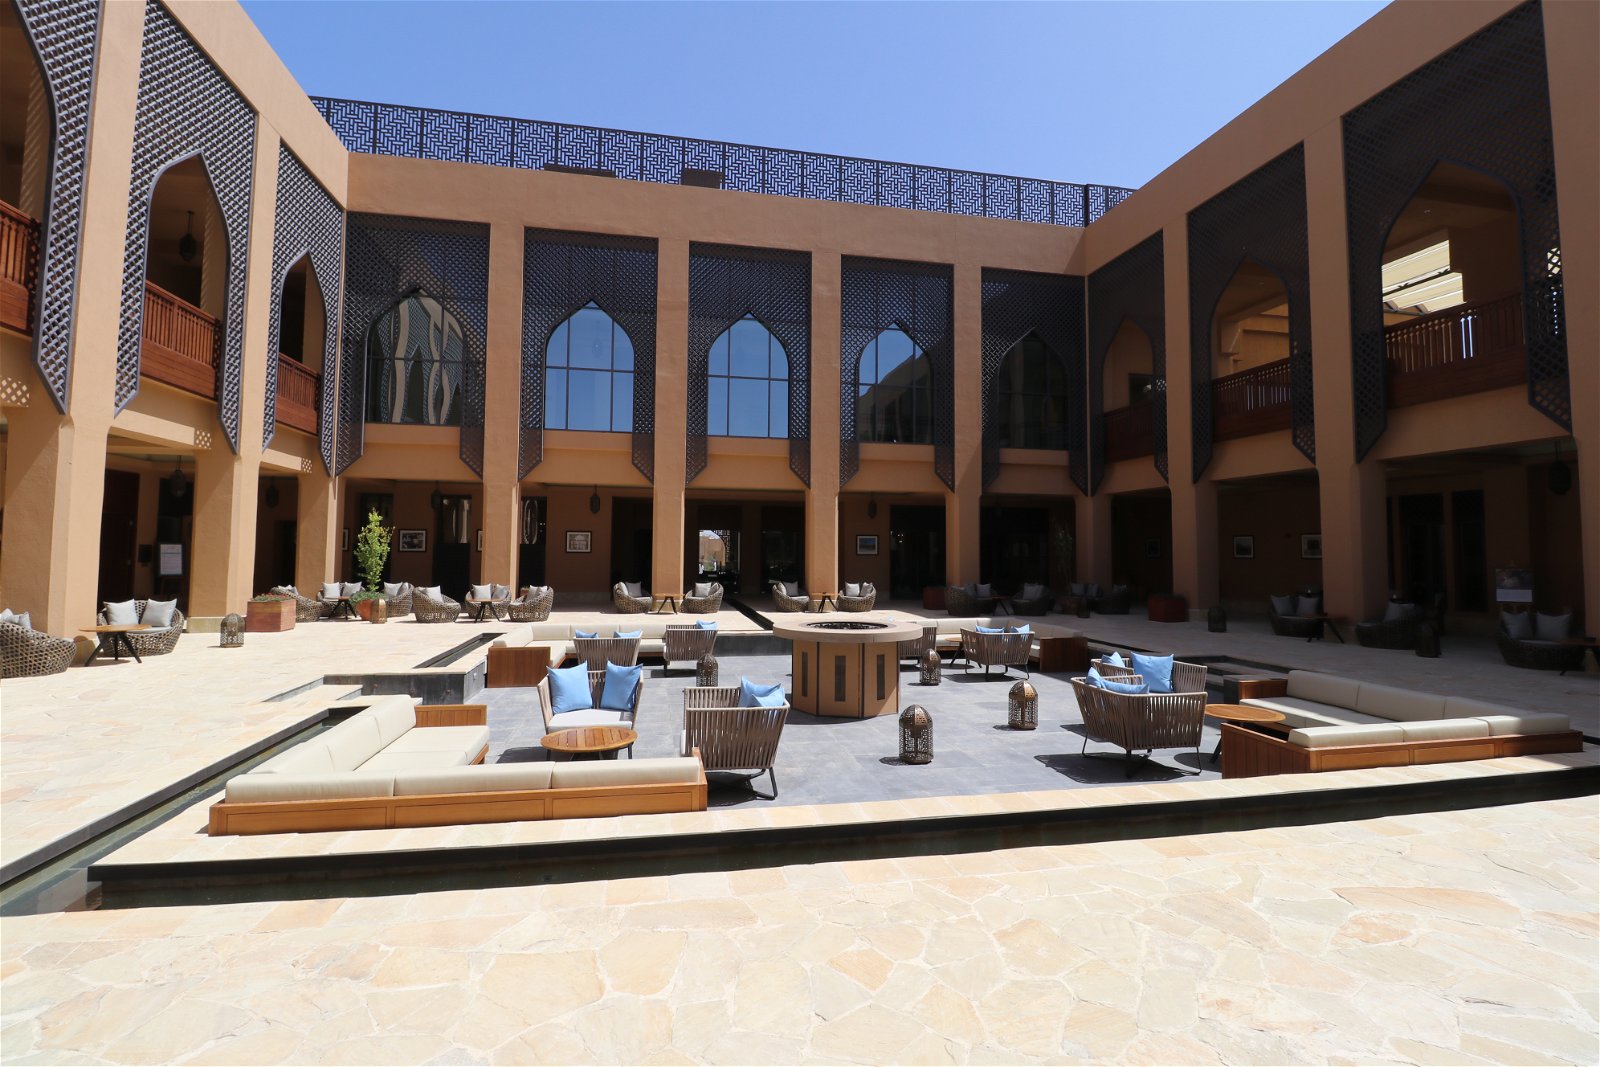 Anantara Al Jabal Al Akhdar courtyard